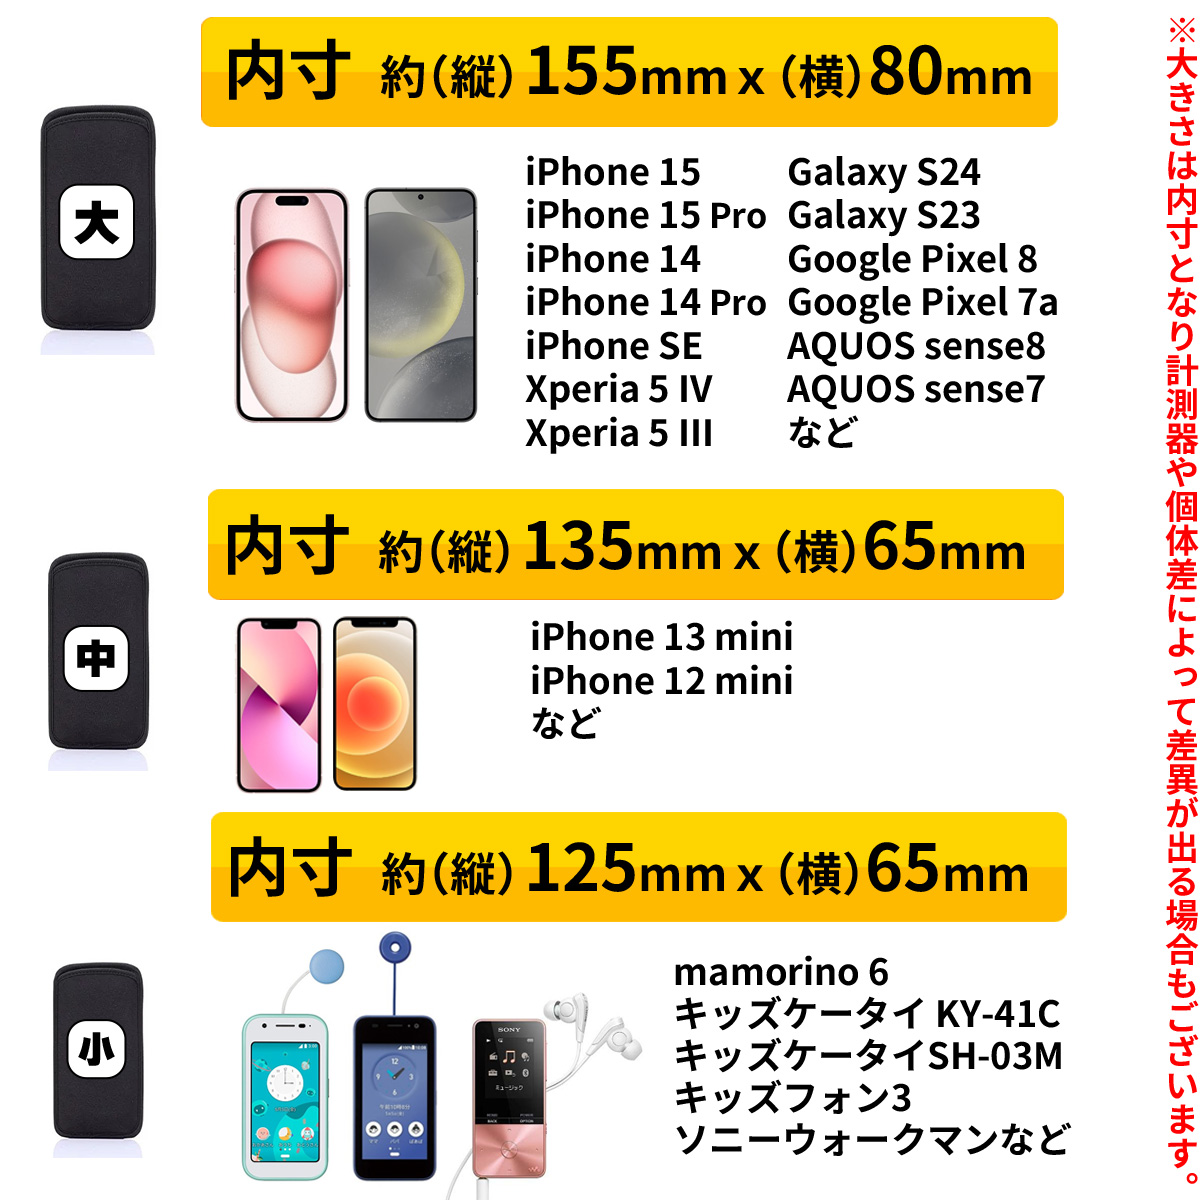 Arrows Aquos ケータイ3 スマホ LG iPhone Galaxy Xperia かんたん携帯10 P-smart カバー ケース スライド式 ネオプレン 本｜mywaysmart｜07